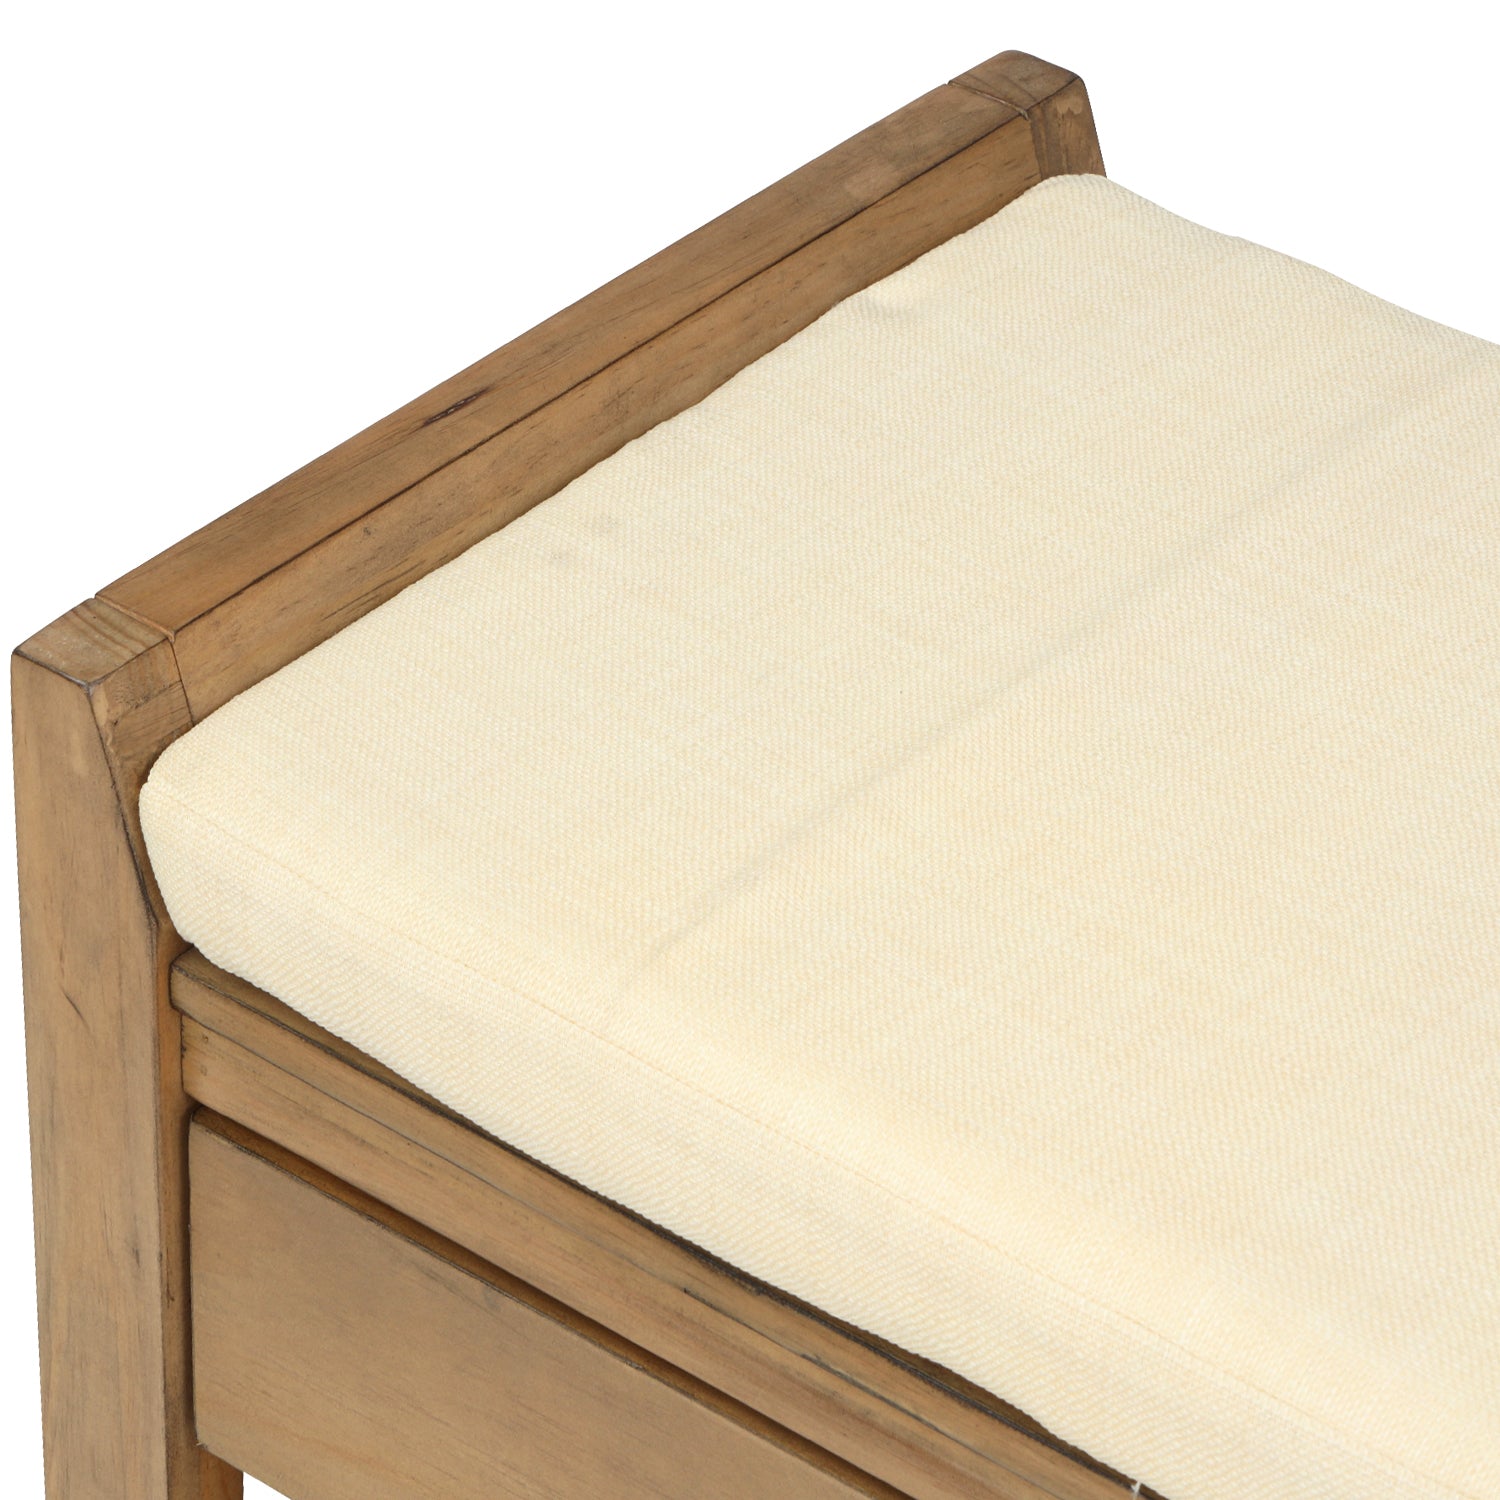 TREXM Upholstered Seat Storage Bench (Tan)